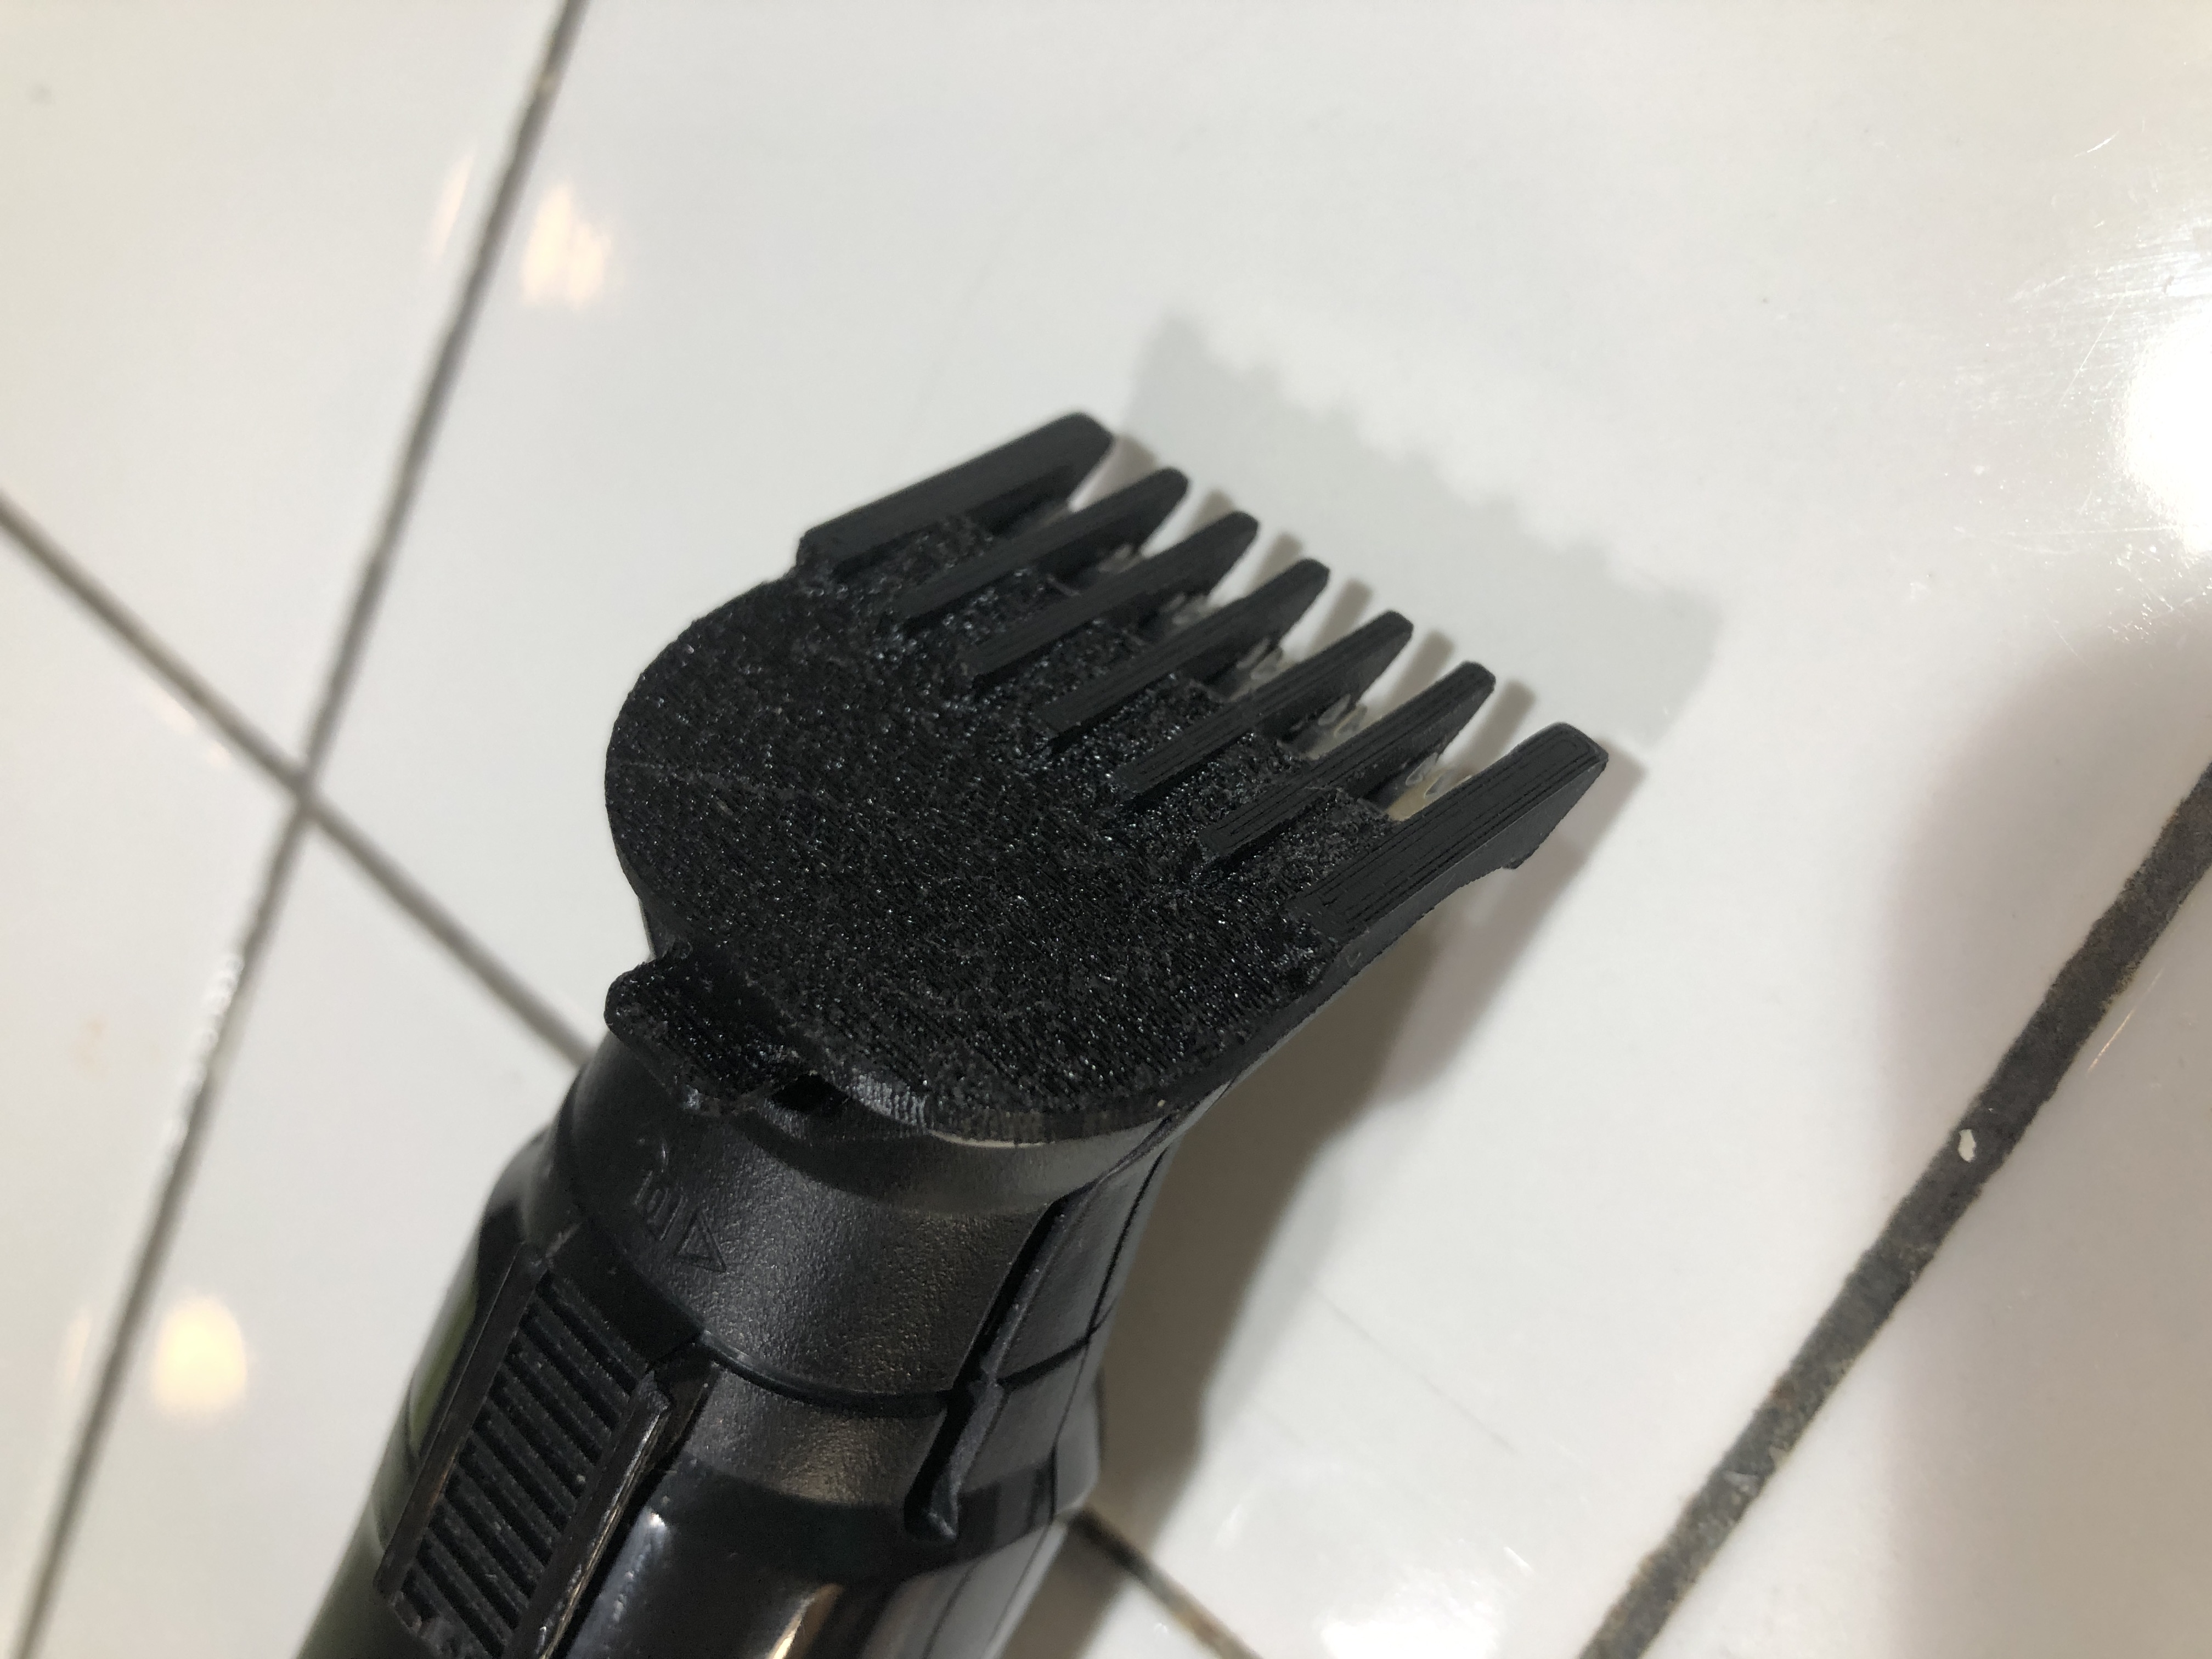 Beard trimmer/shaver attachment